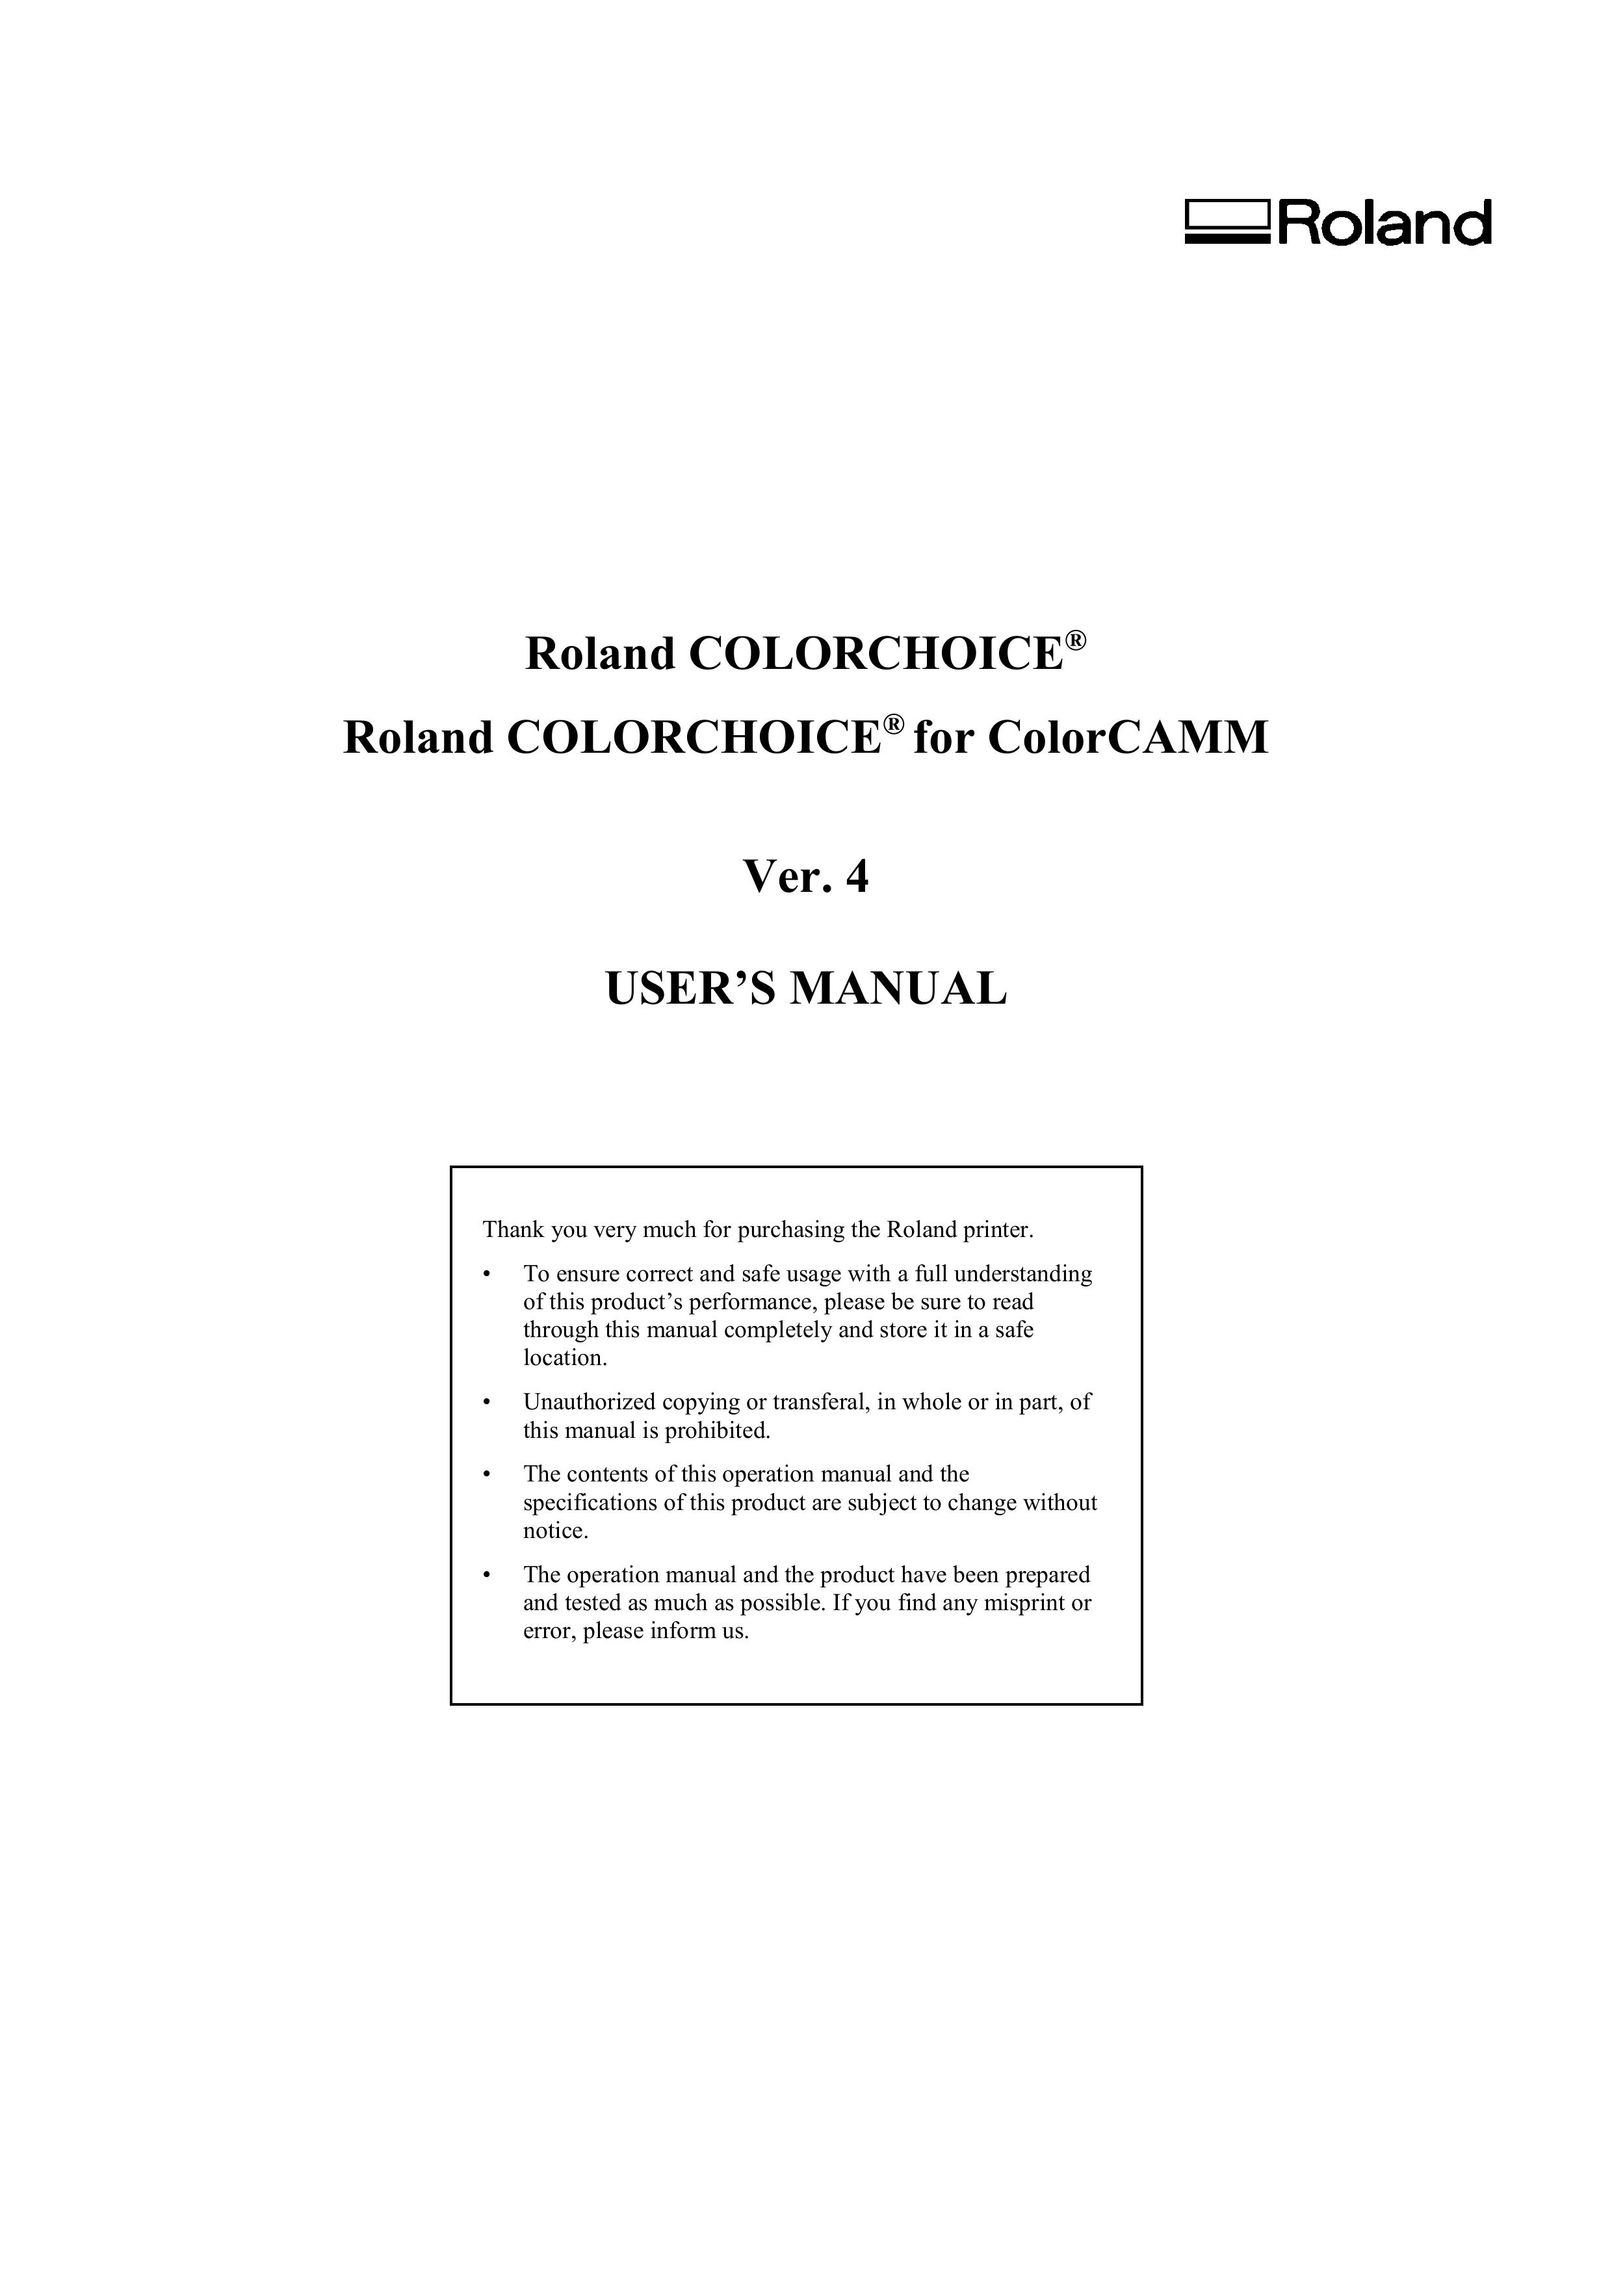 Roland COLORCHOICE Printer User Manual